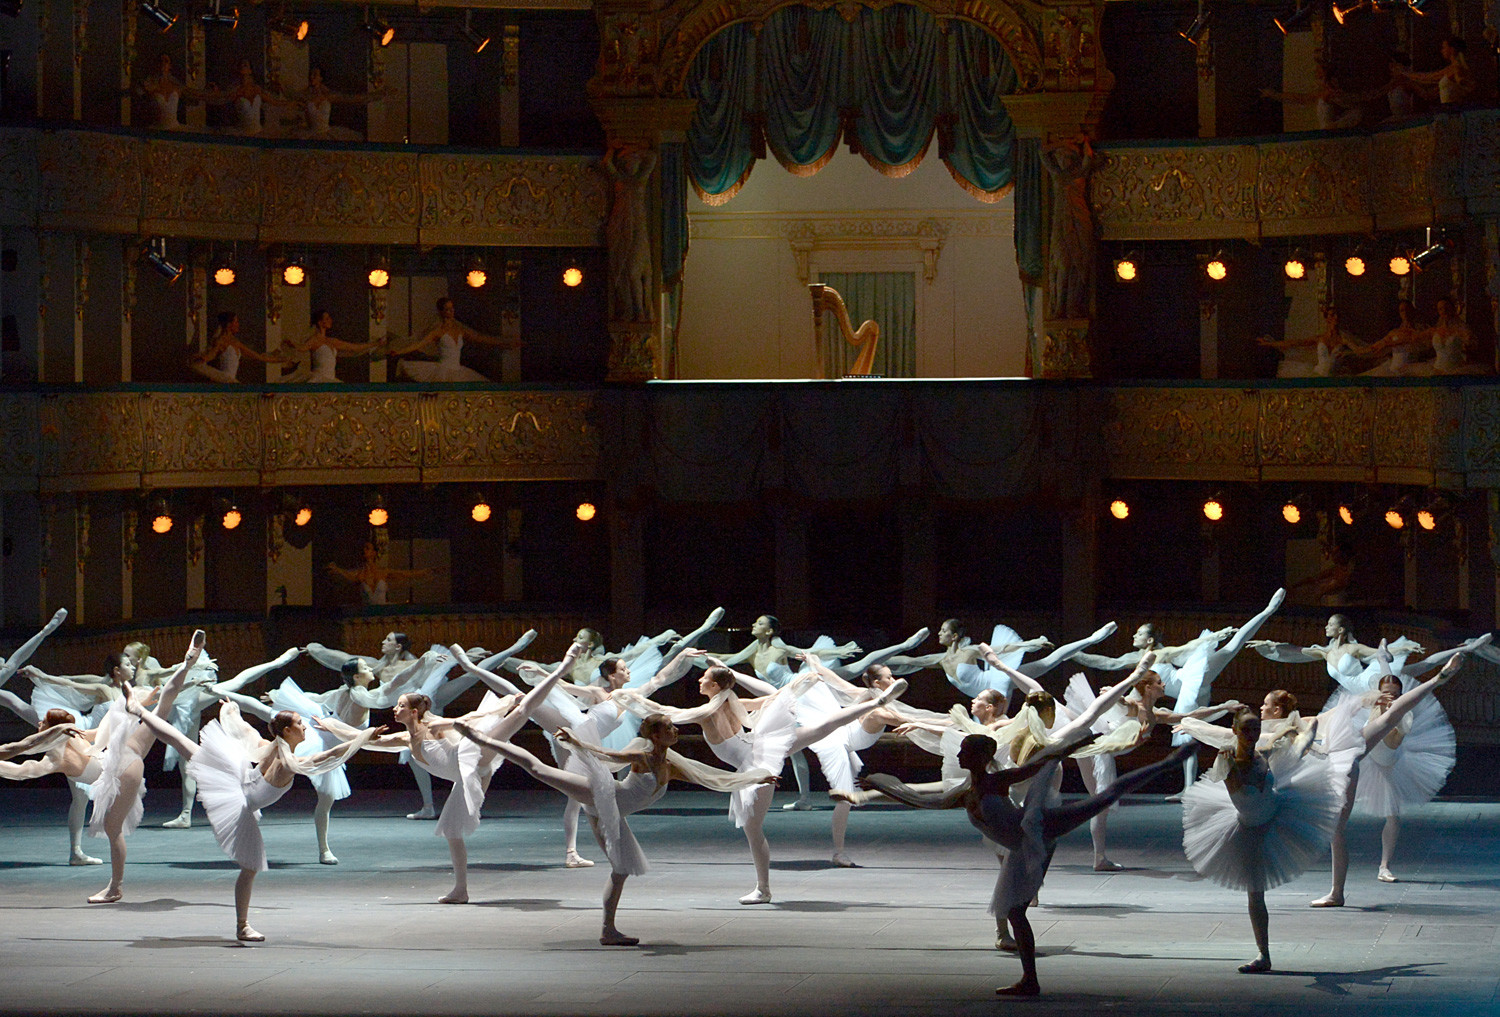 Prizor iz baleta Labodje jezero po koreografiji Petipaja.